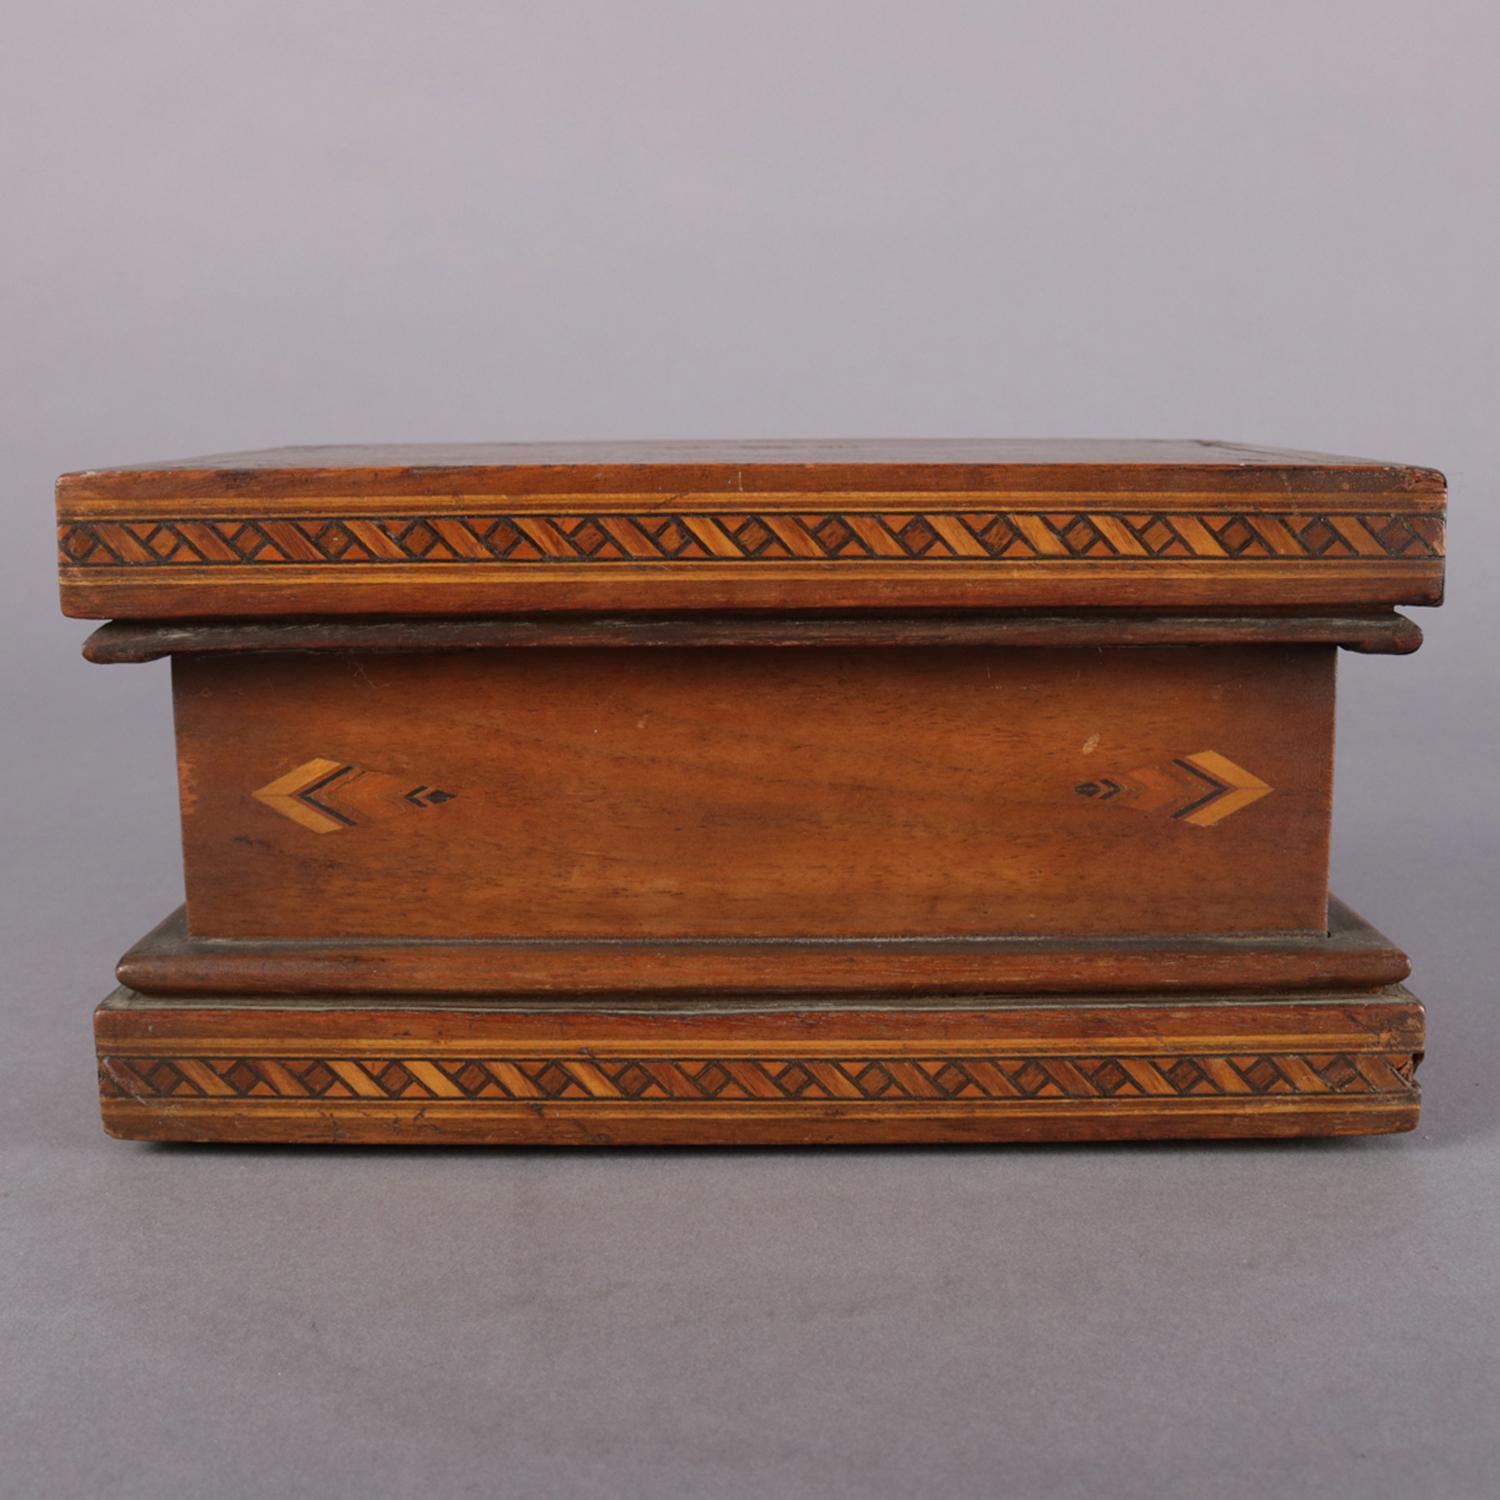 Antique English Inlaid Parquetry Petite Humidor Cigar Box, 19th Century 1